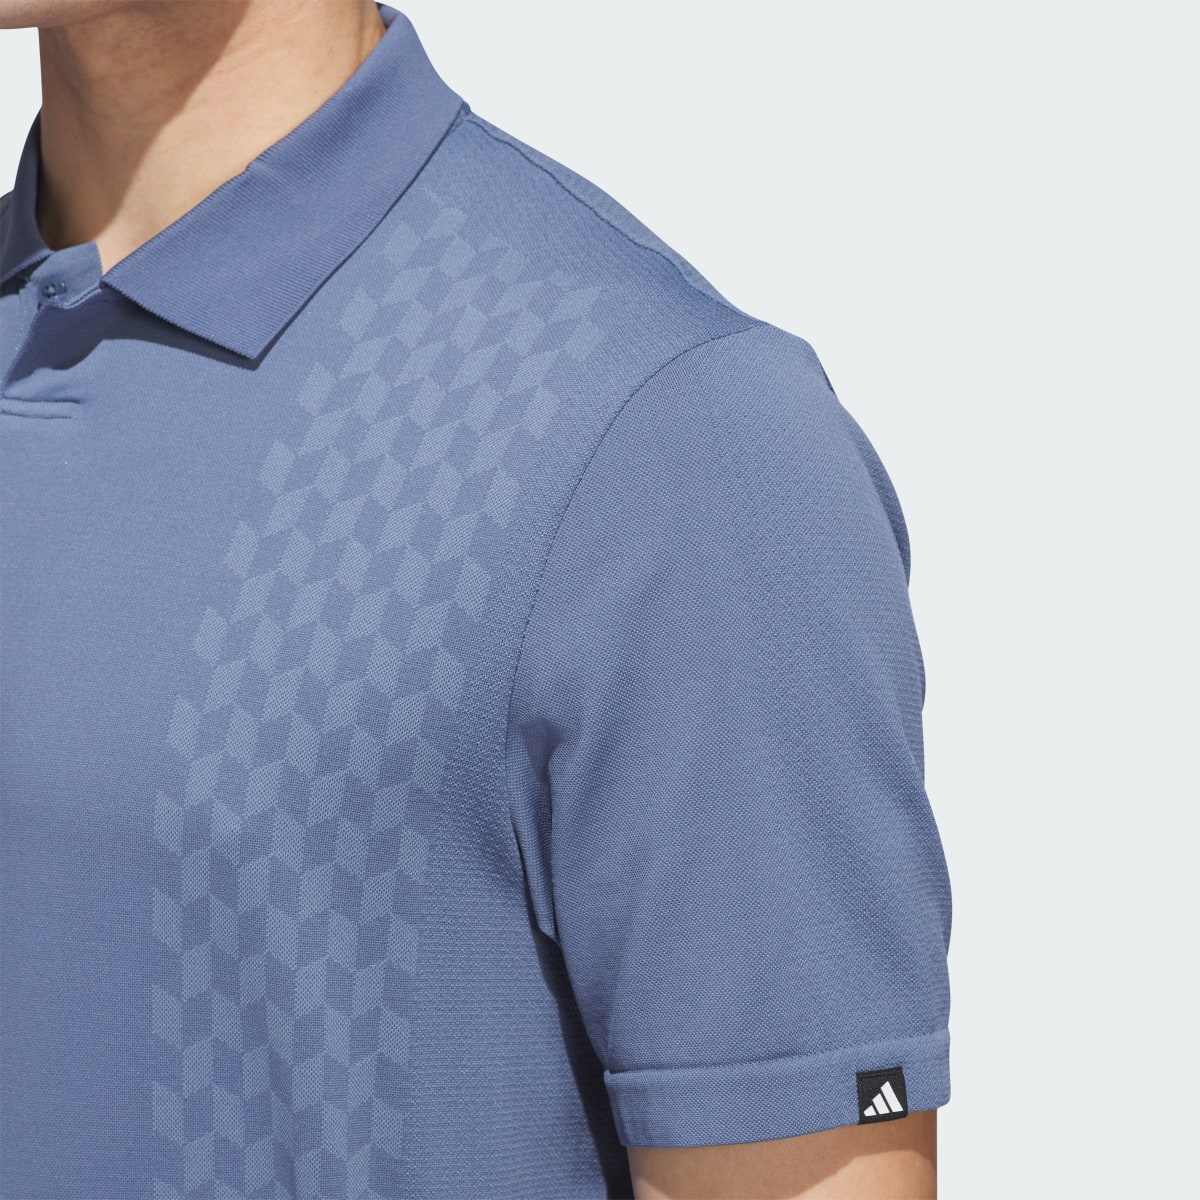 Adidas Ultimate365 Tour Primeknit Polo Shirt. 7